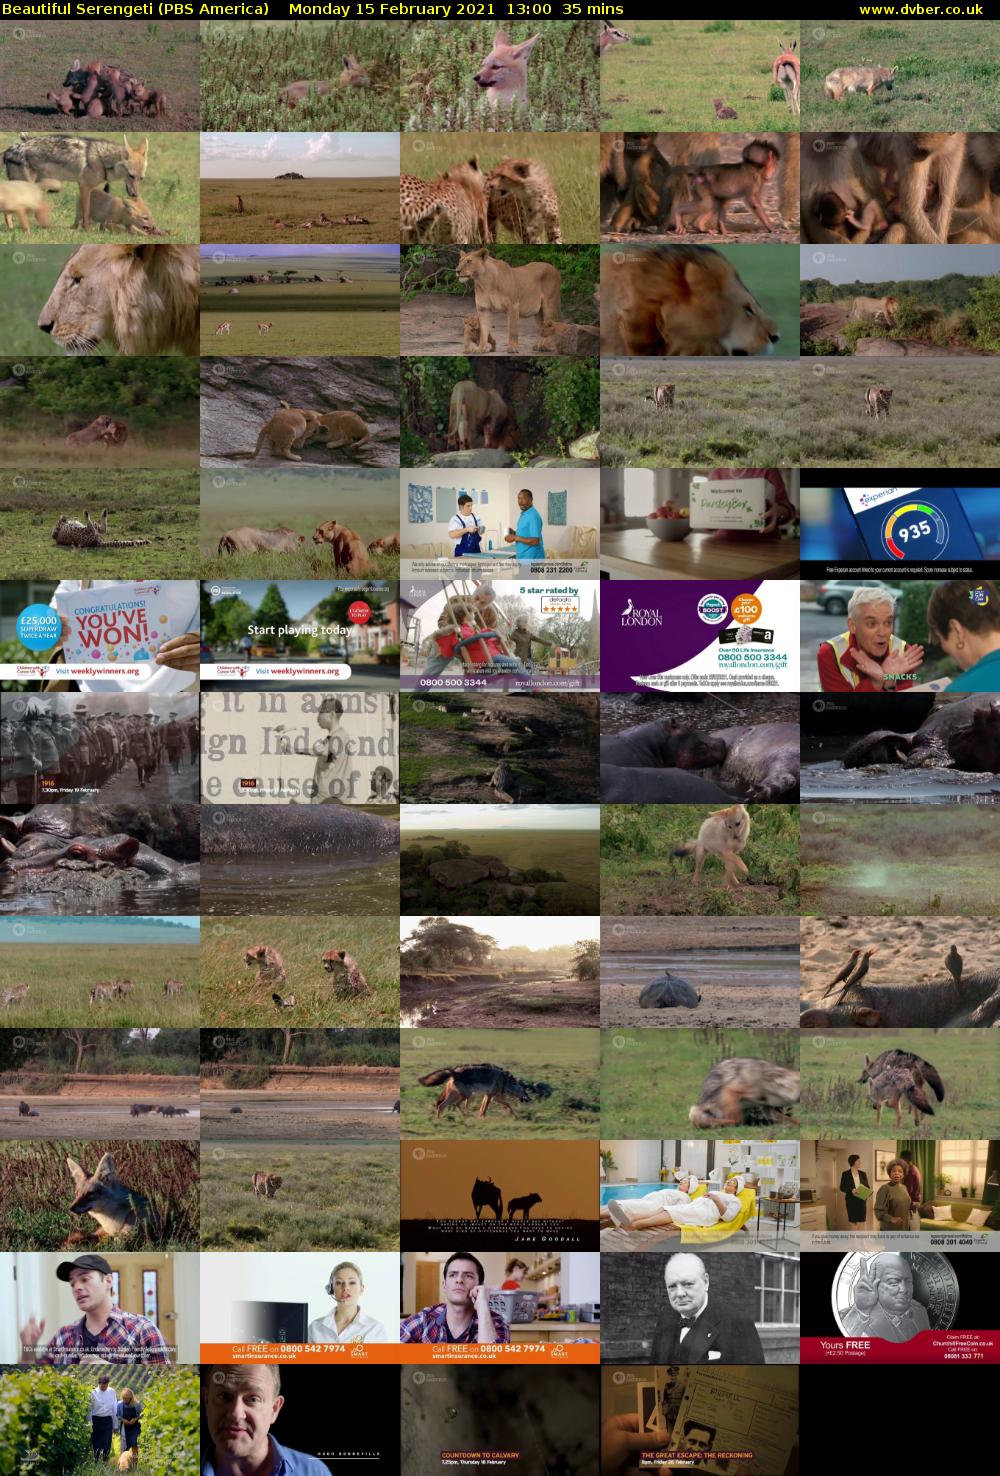 Beautiful Serengeti (PBS America) Monday 15 February 2021 13:00 - 13:35